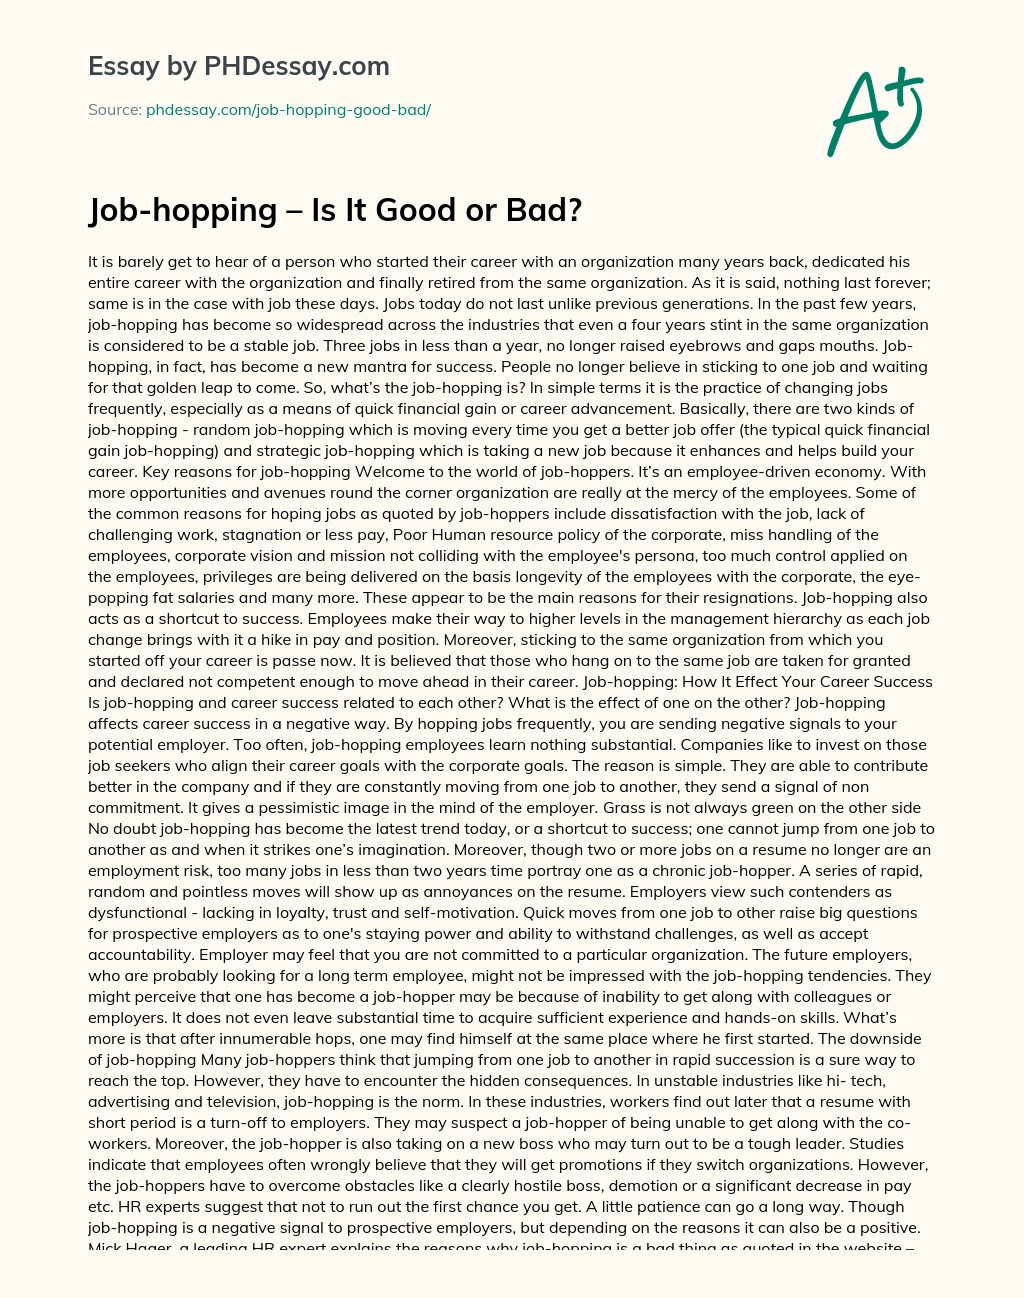 Job-hopping – Is It Good or Bad? essay